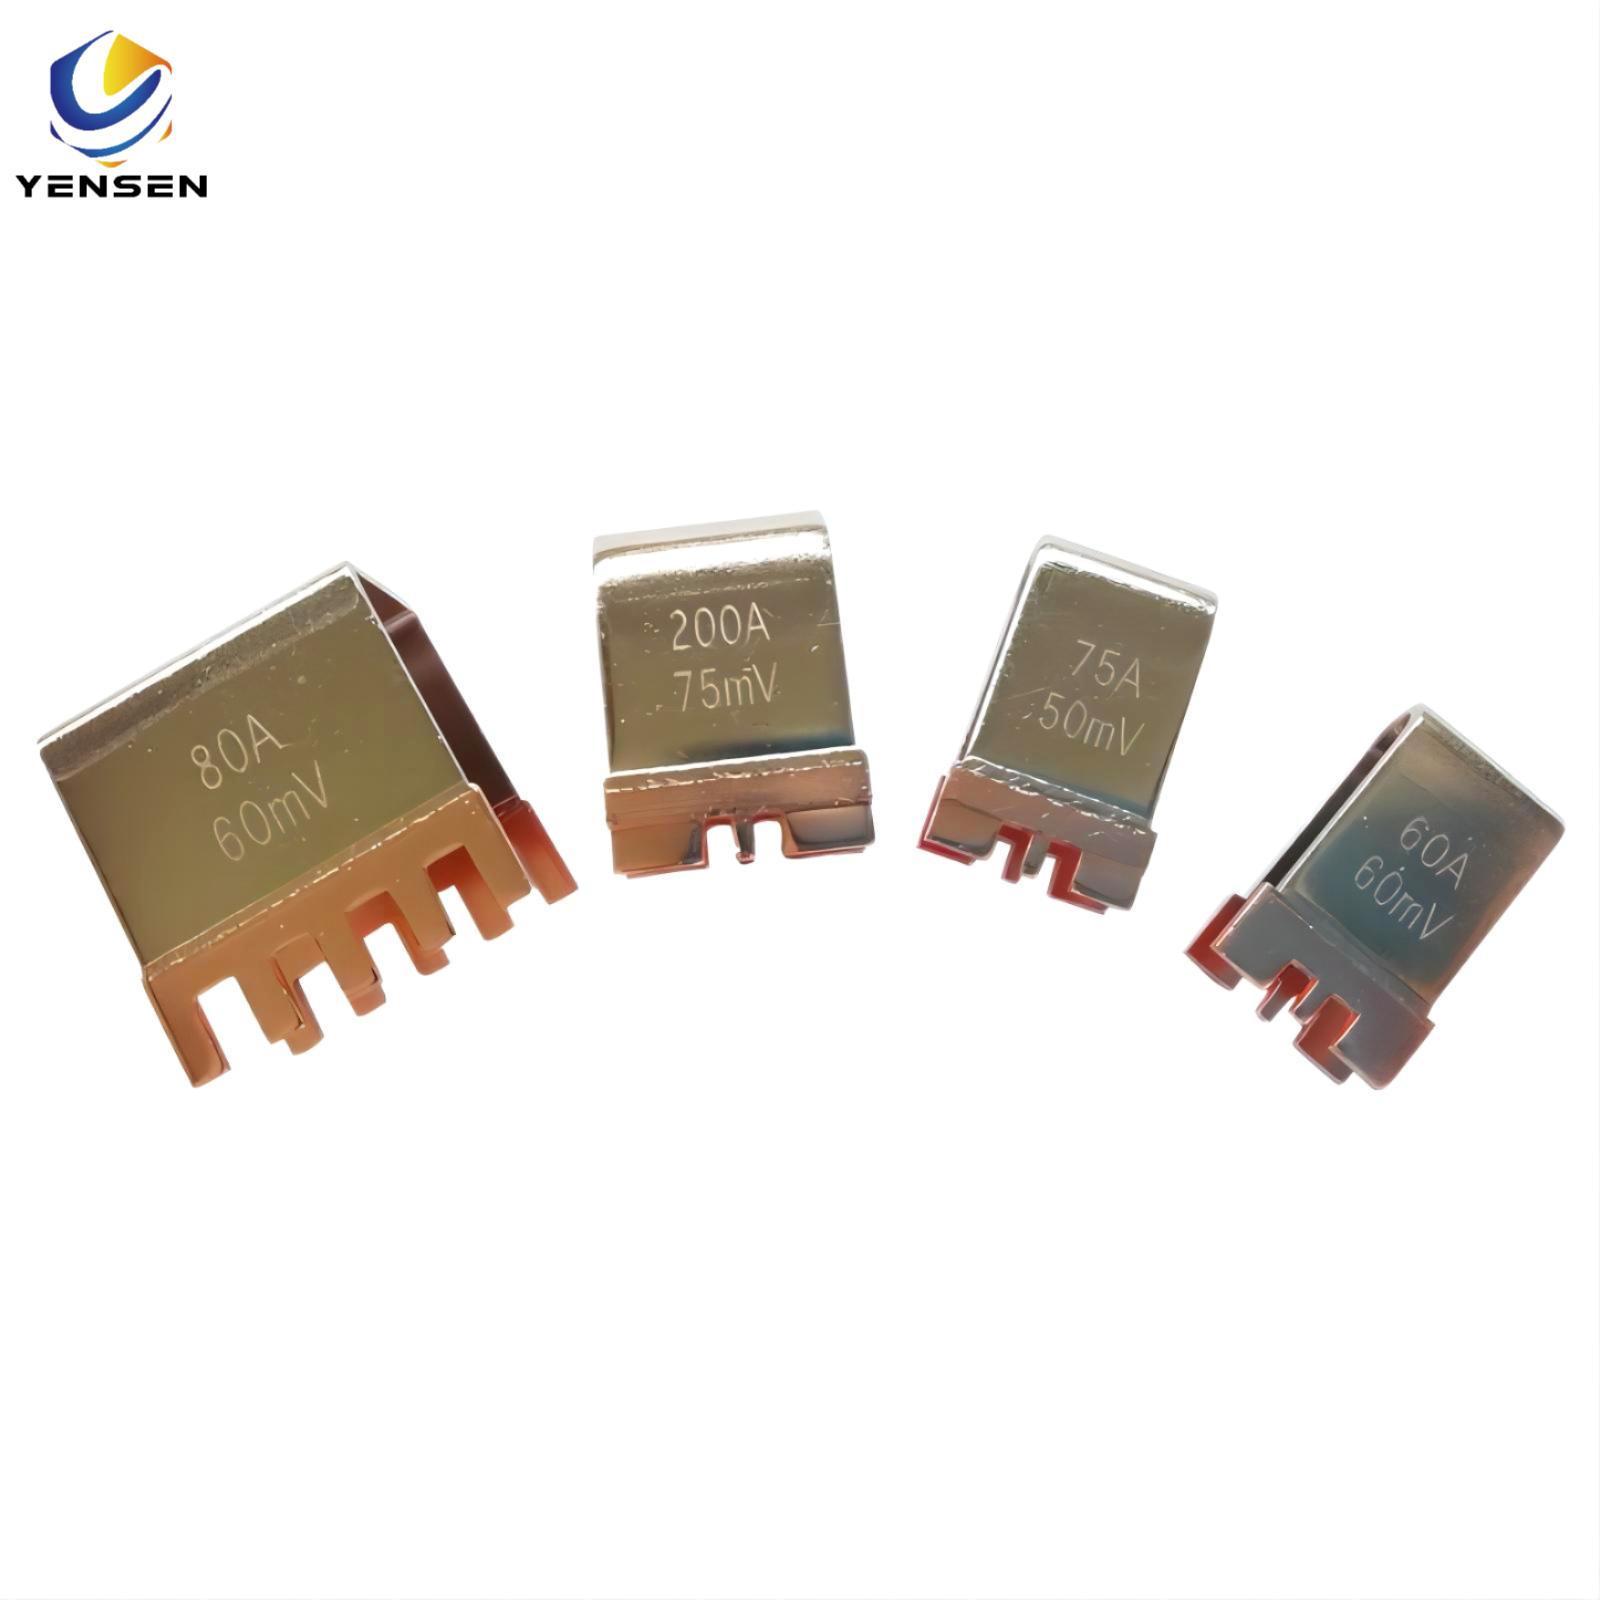  80A 60mv U-Shaped Signal Sampling Shunt High Current Resistor 